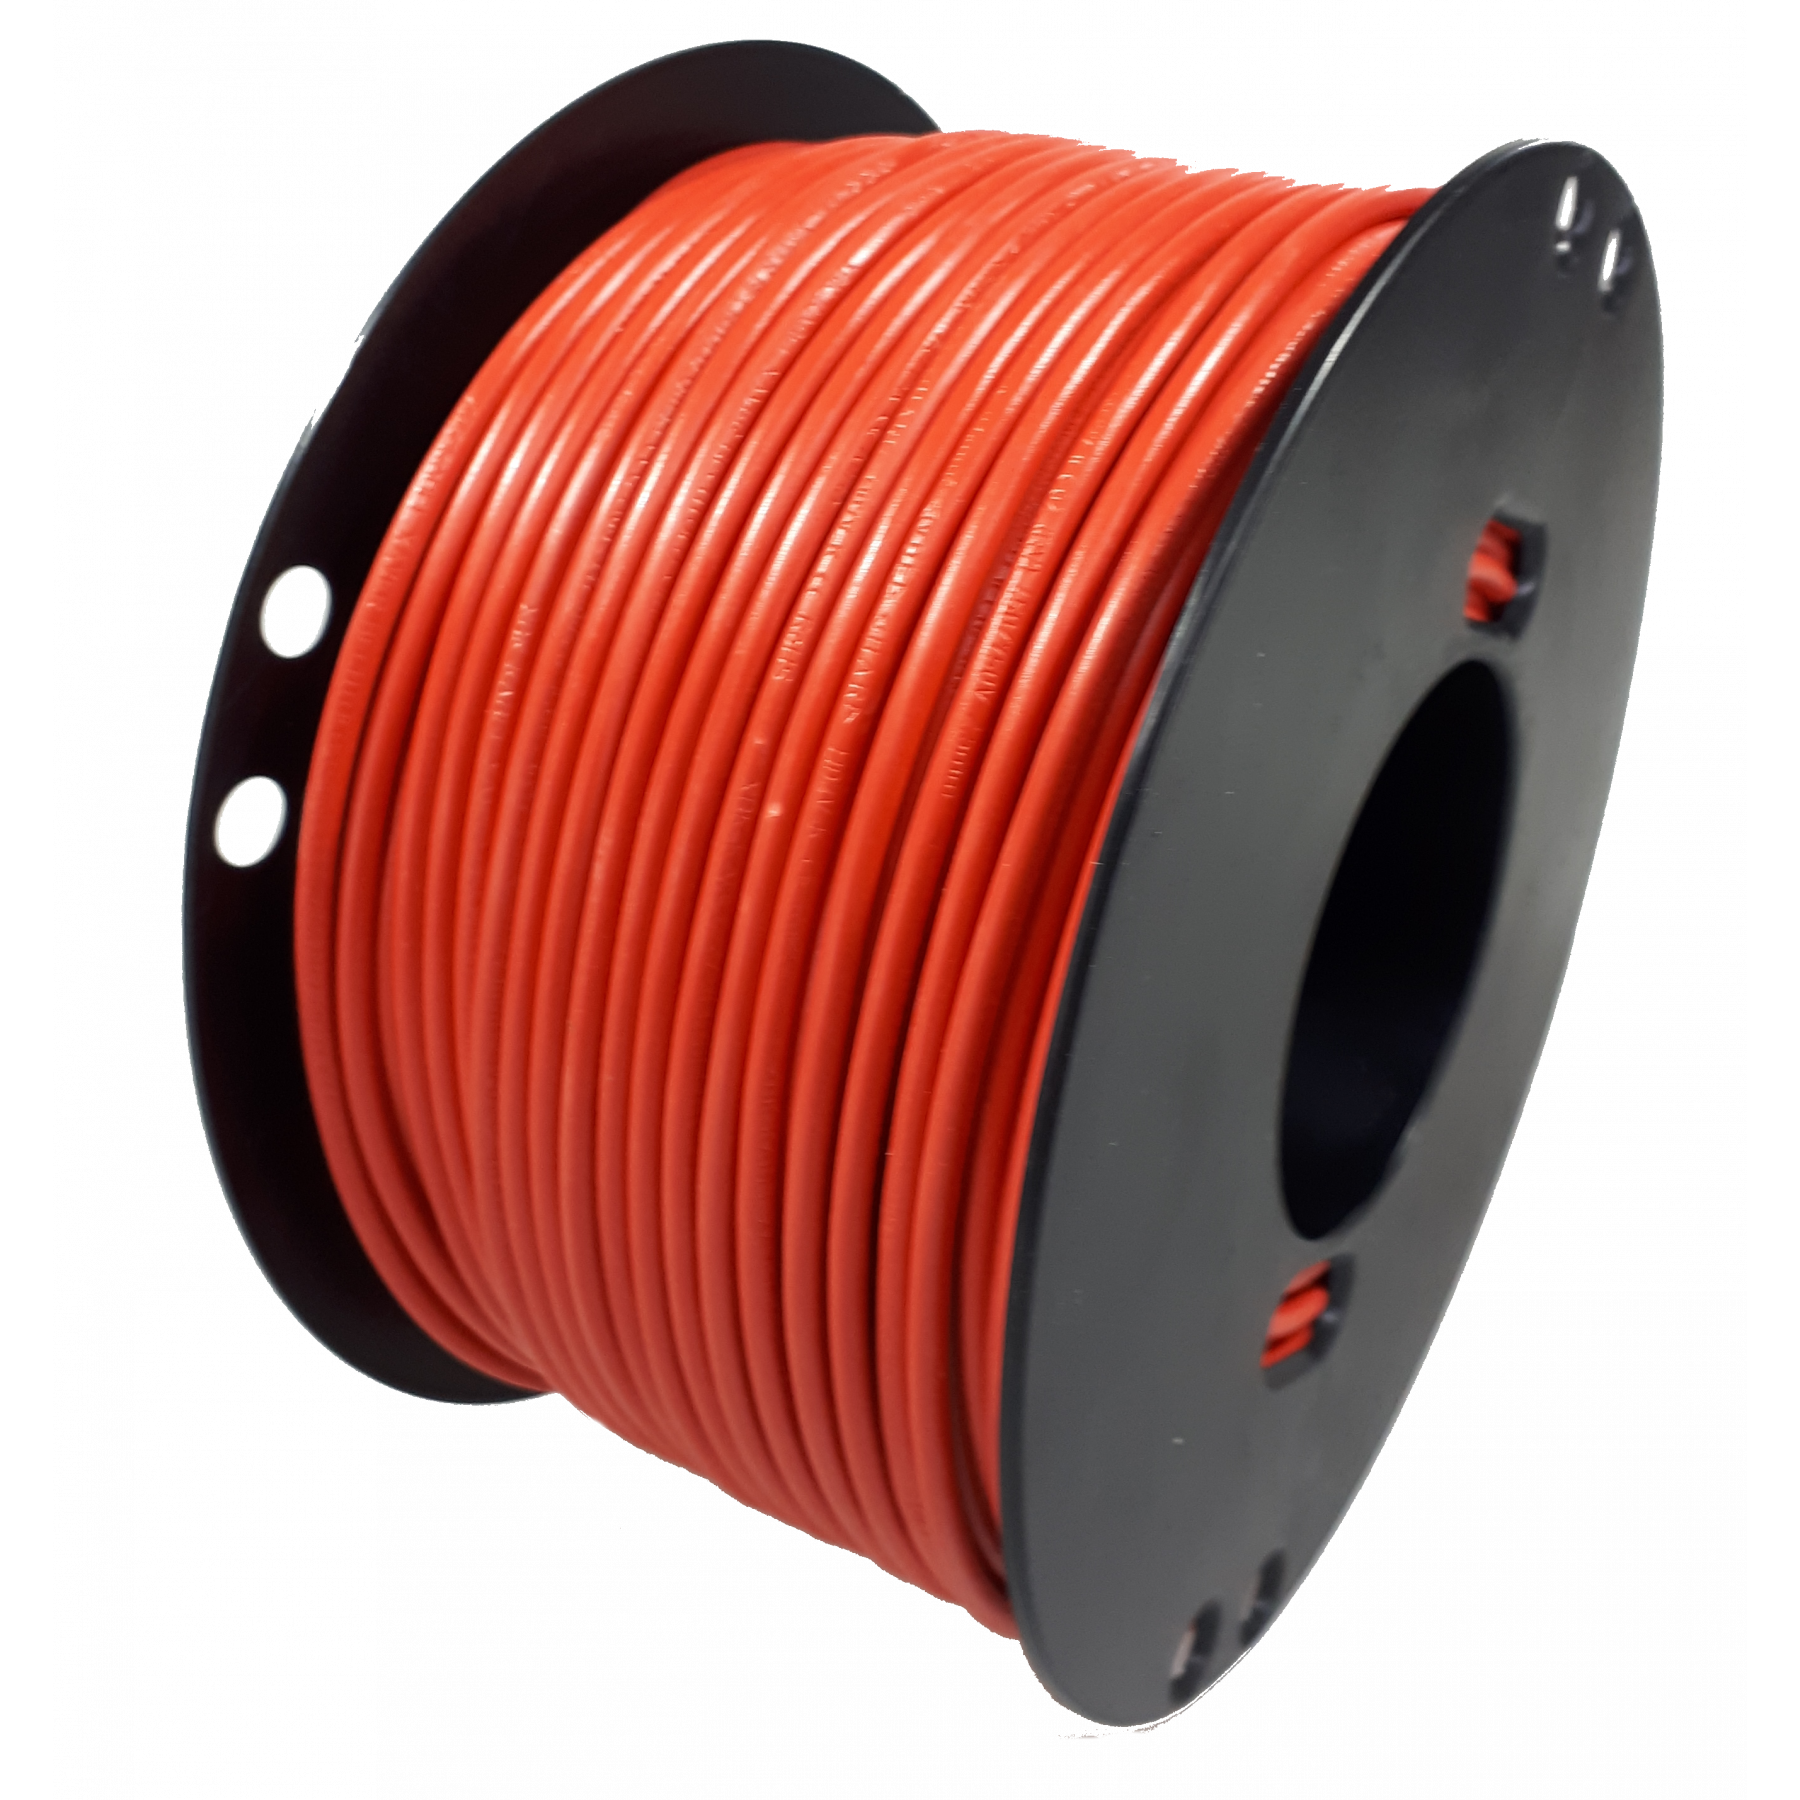 Kabel 4,0mmq rood 50m haspel